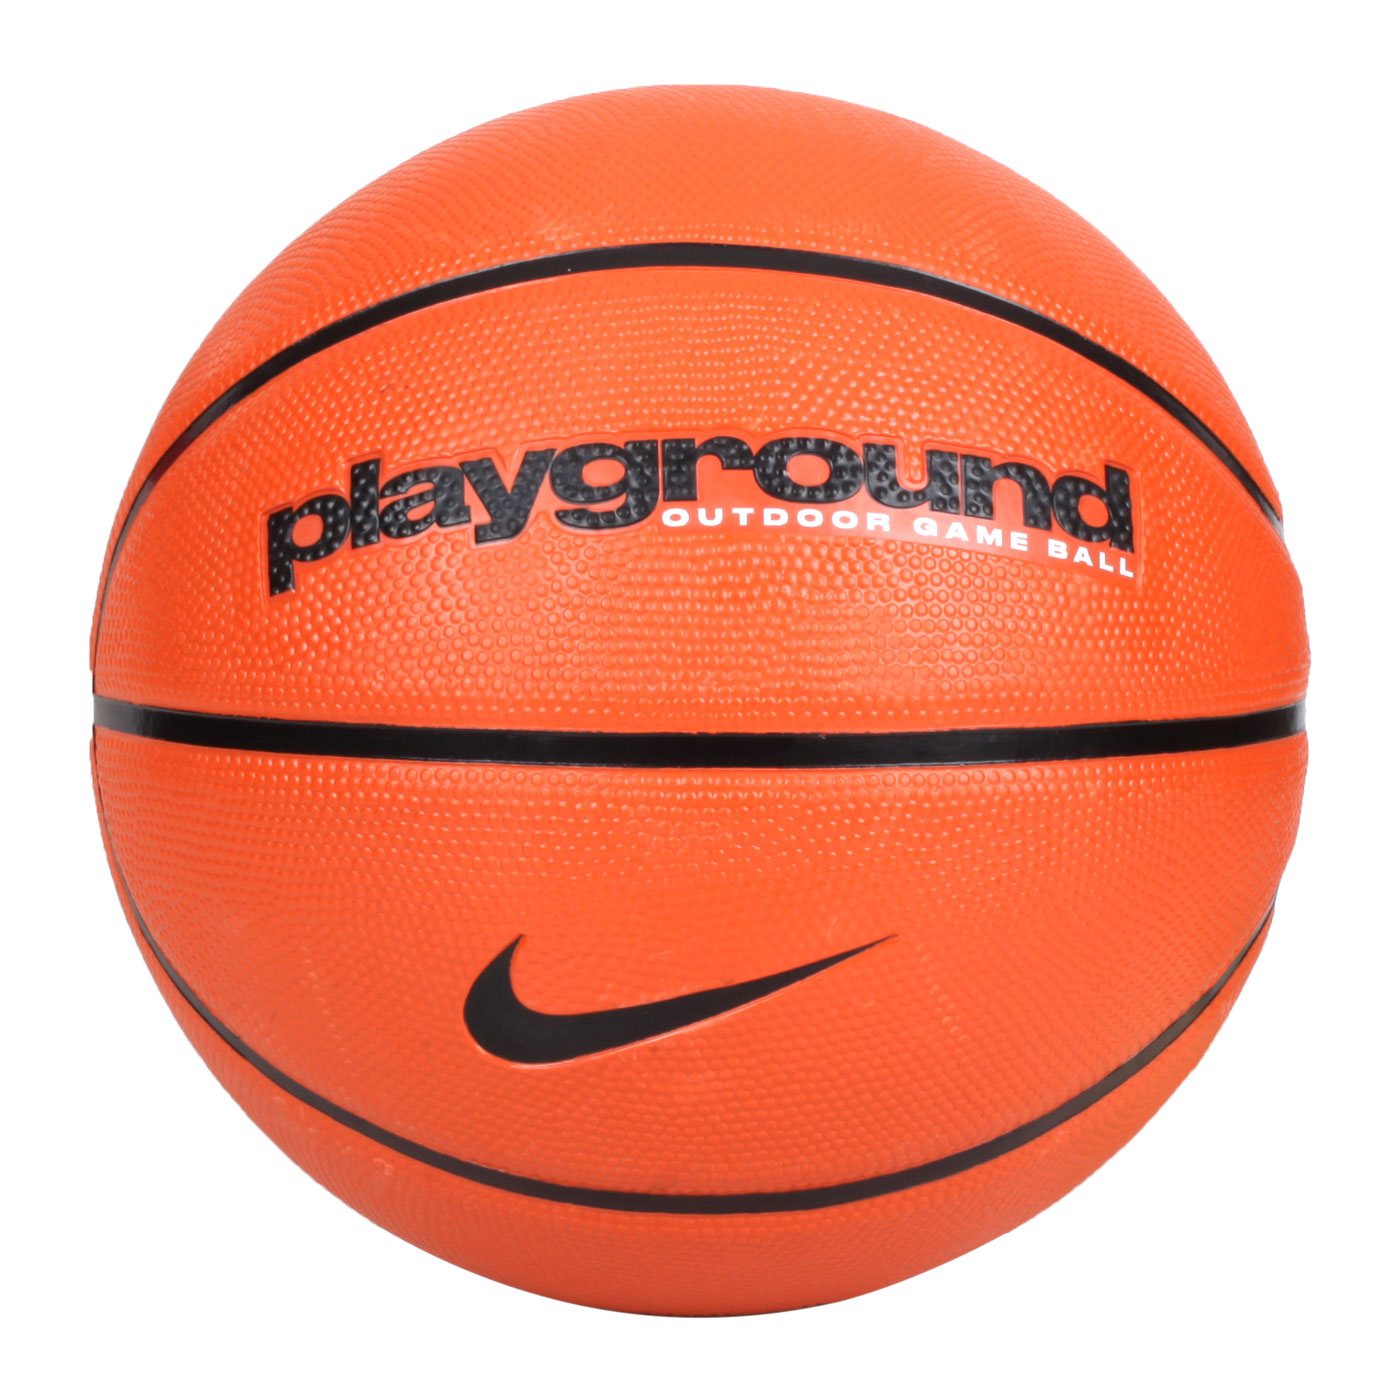 NIKE EVERYDAY PLAYGROUND 8P GRAPHIC 7號籃球 N100437181107 - 橘黑白